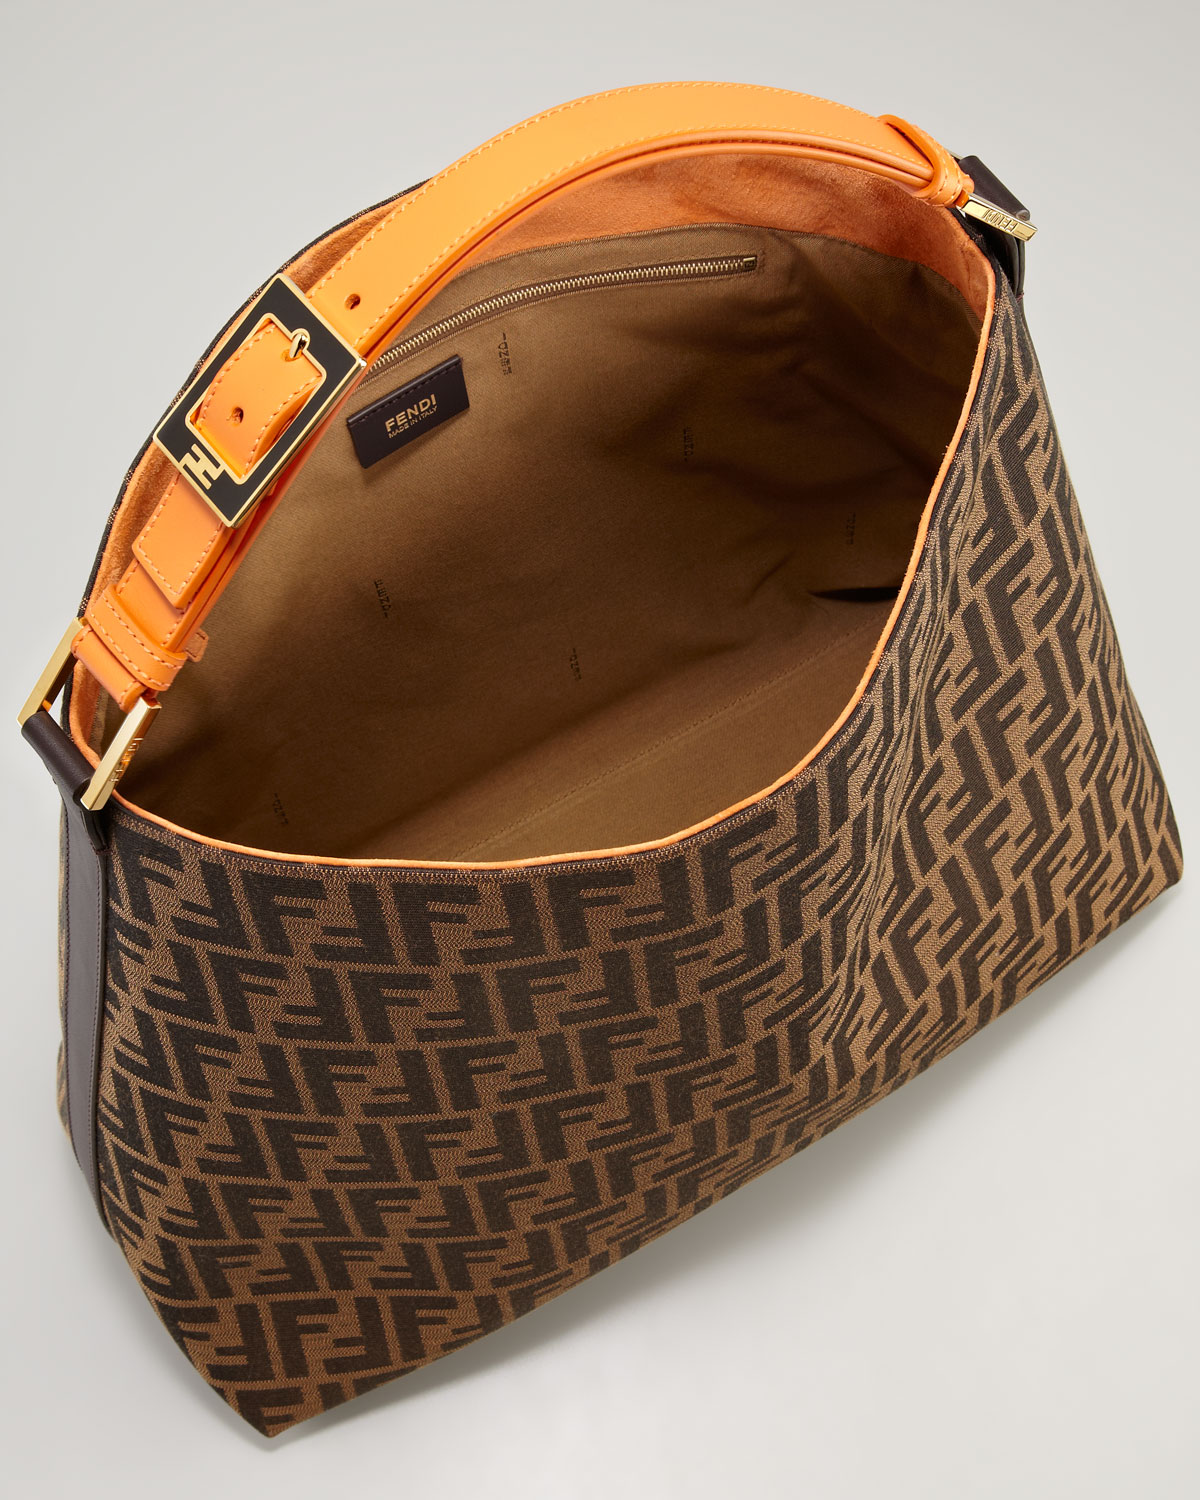 Lyst - Fendi Zucca Large Hobo Bag in Brown